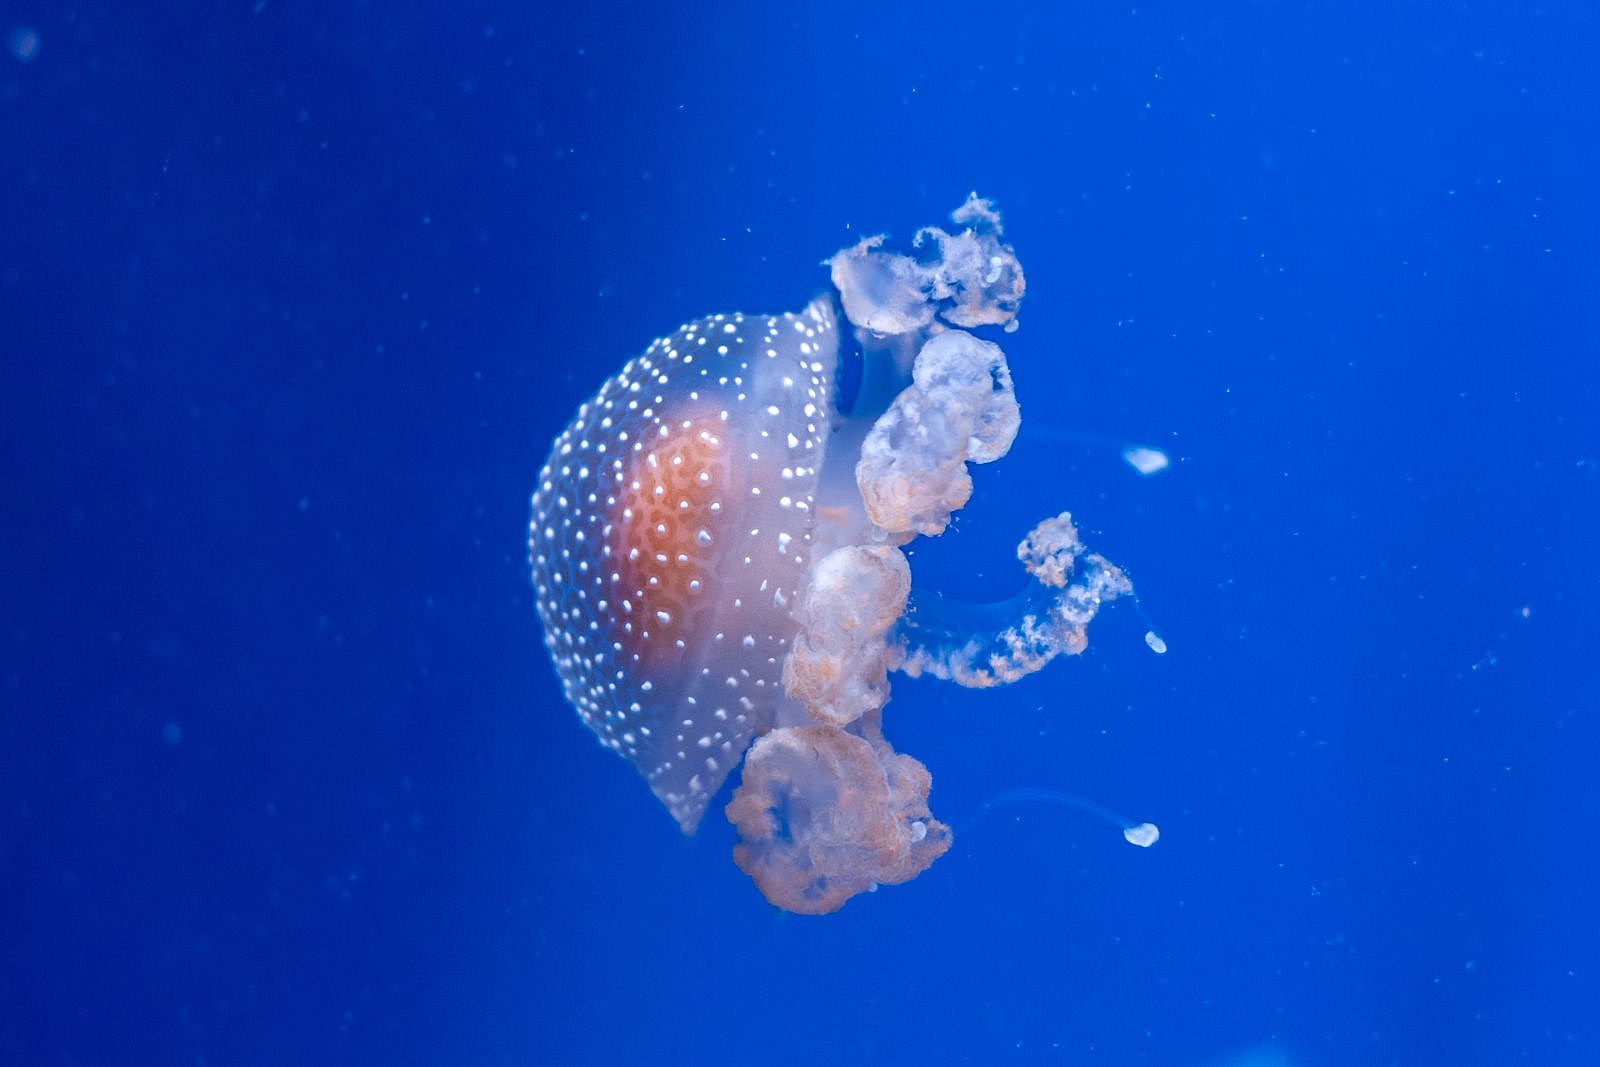 Texan Shores Under Siege: Australian Spotted Jellyfish Invasion